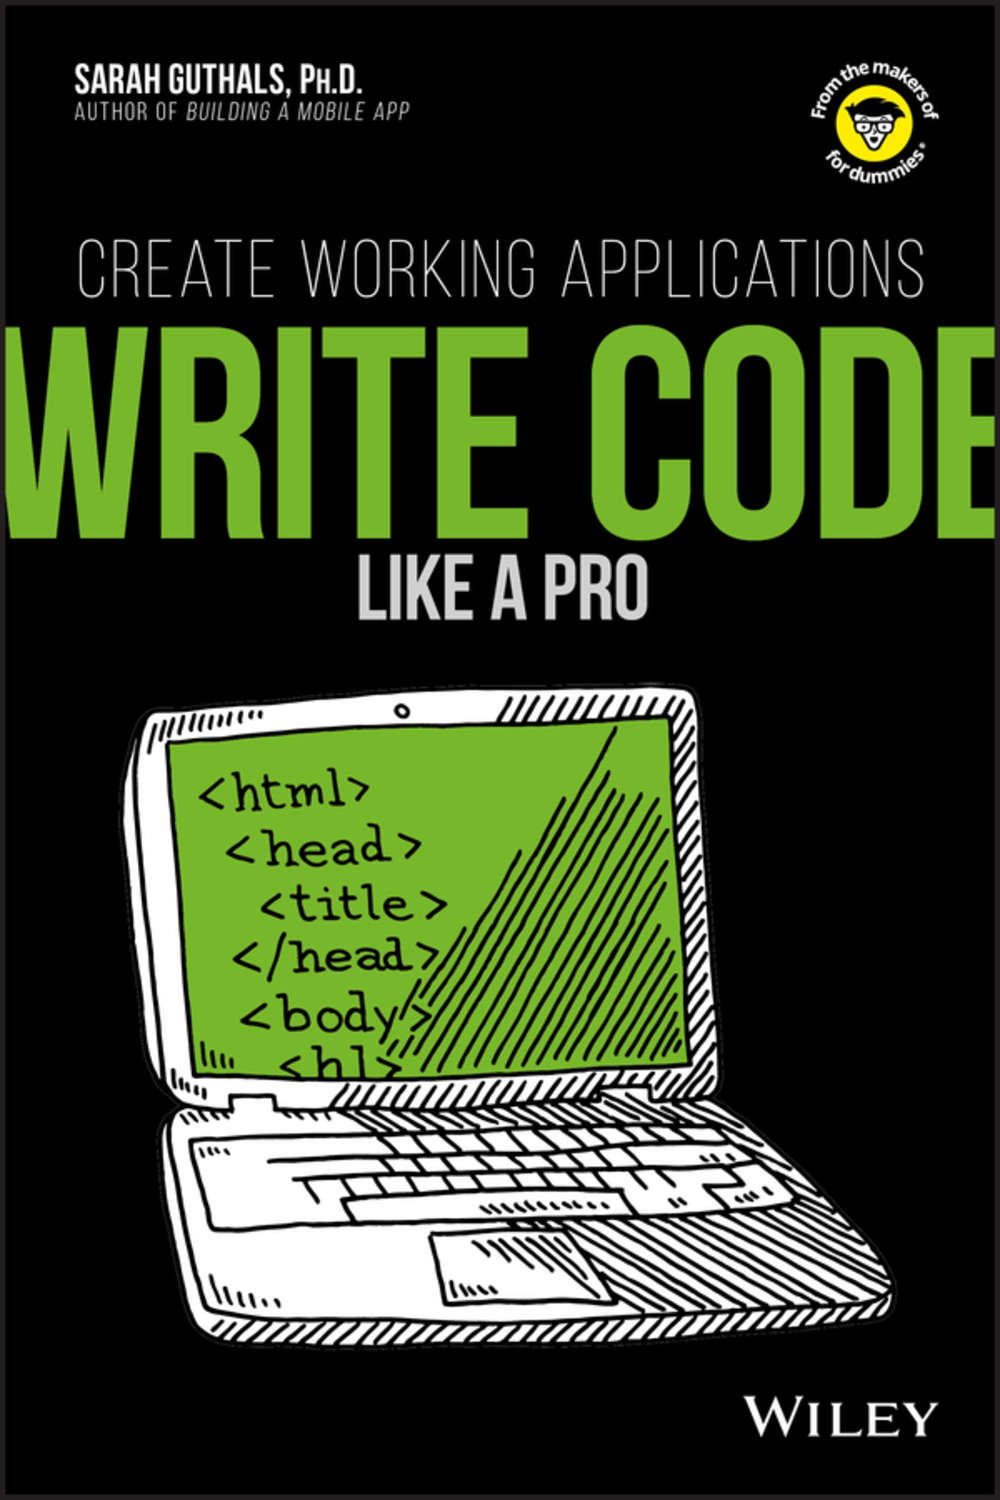 Code like me. Write code. Write code Travel.